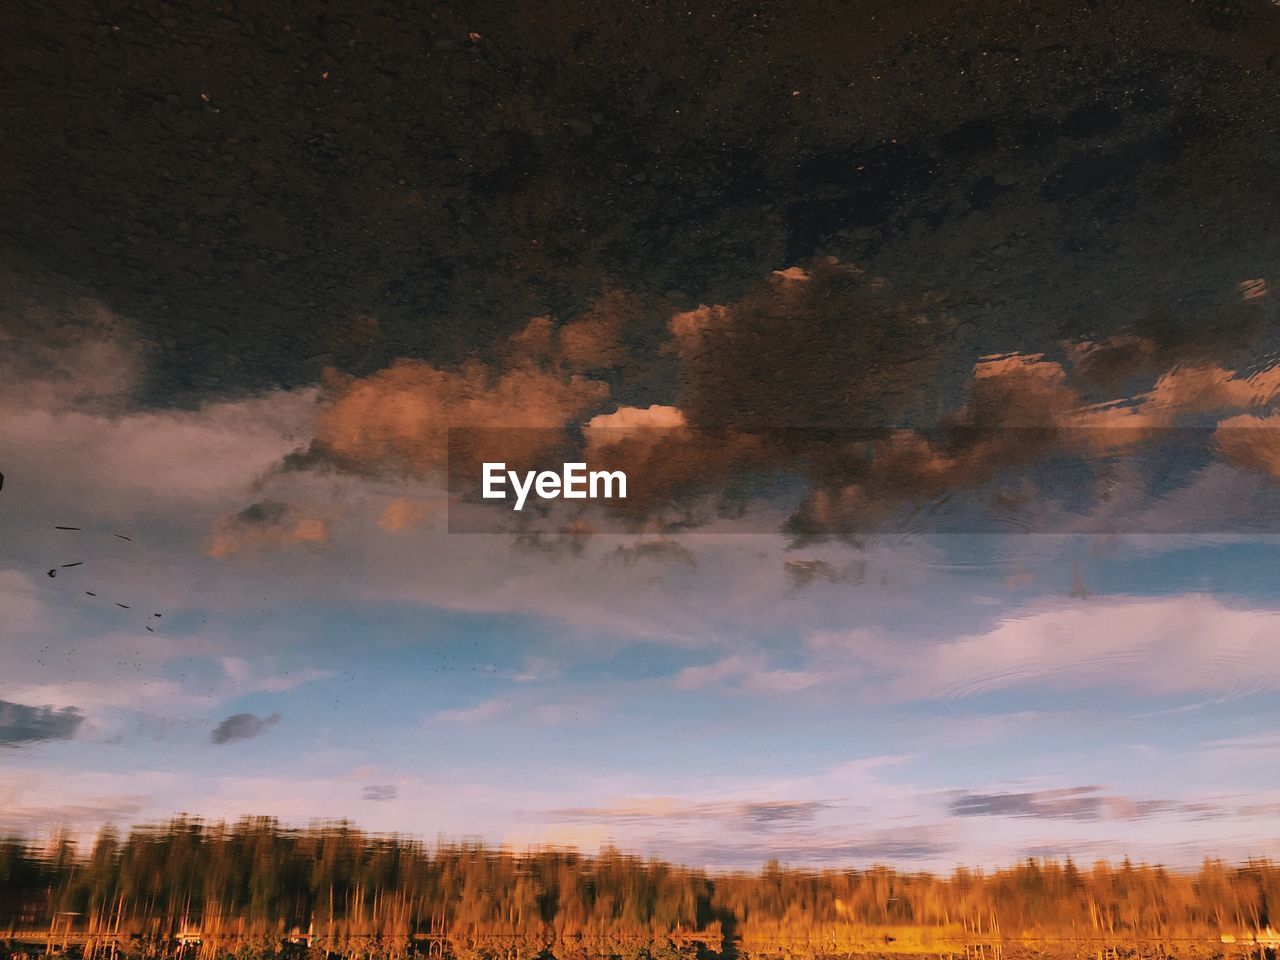 Cloudy sky reflecting in lake